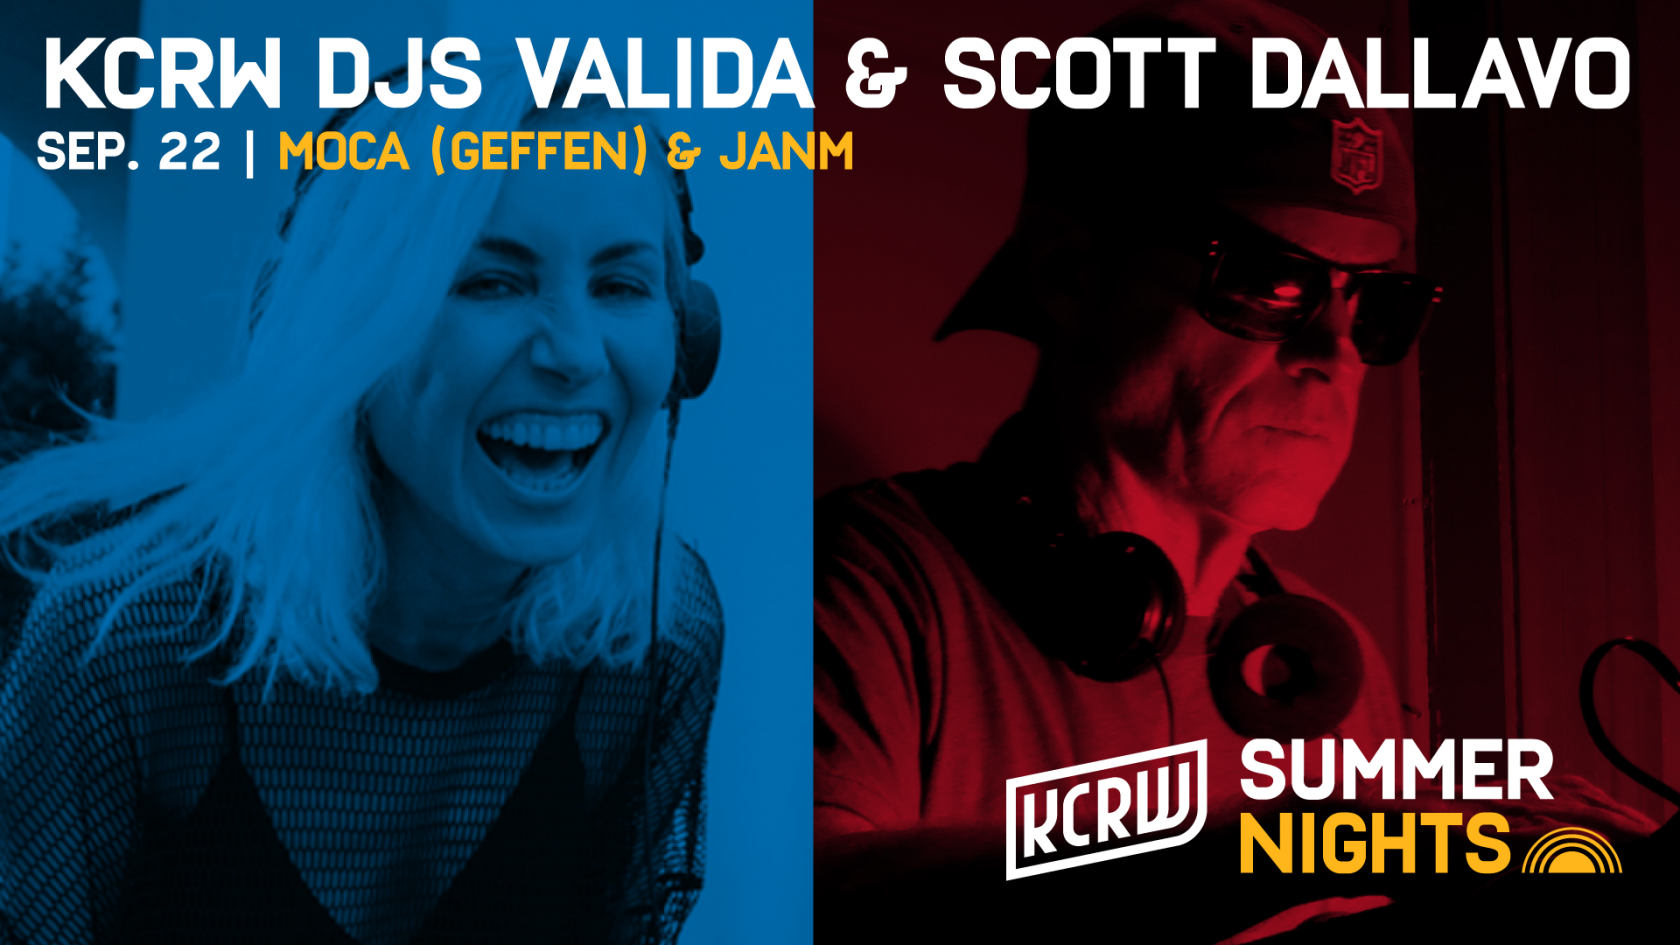 KCRW Summer Nights at MOCA GEFFEN and JANM with DJ Valida  & Scott Dallavo